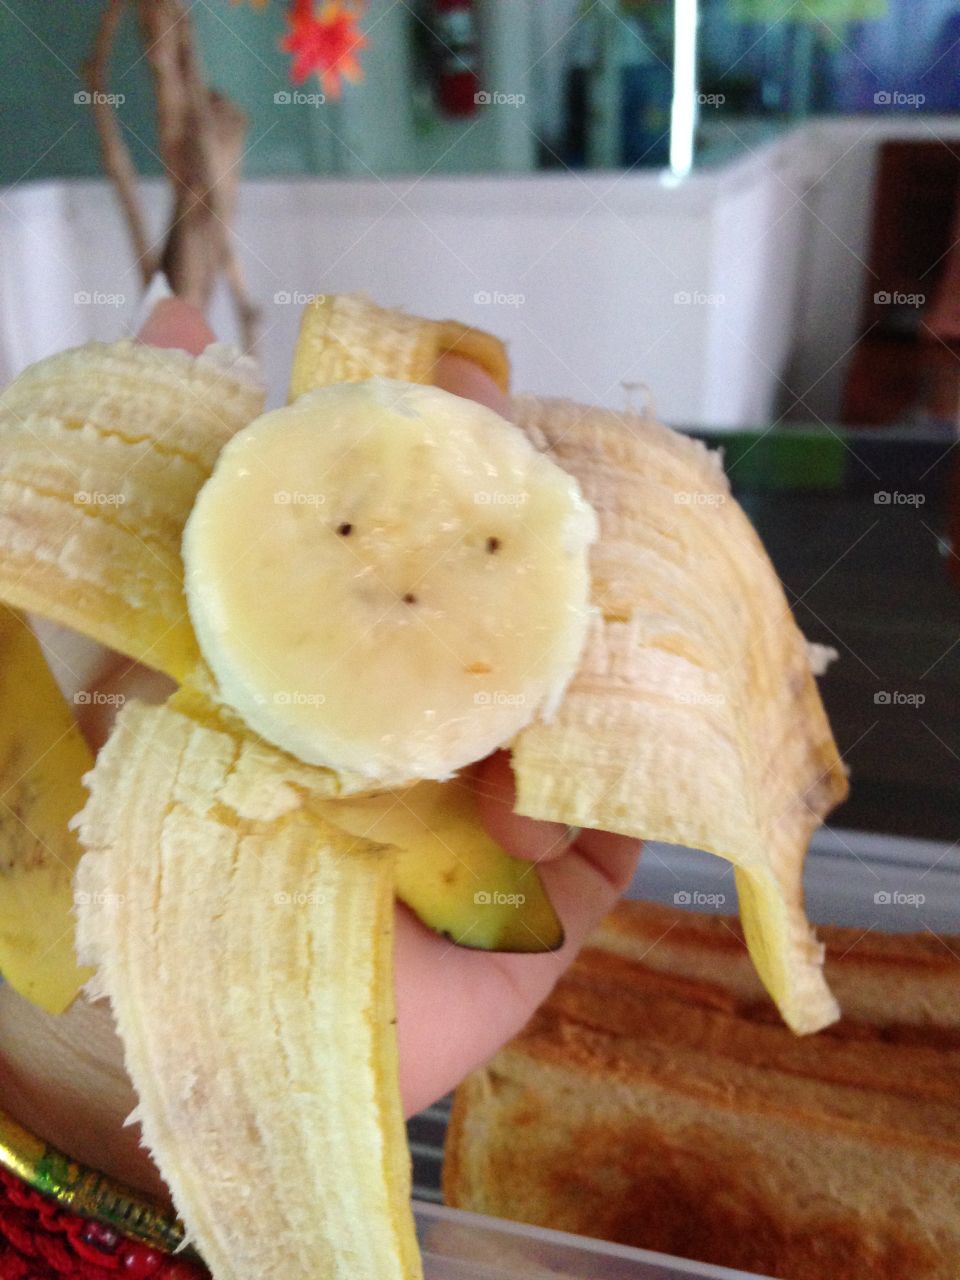 My banana in the morning 